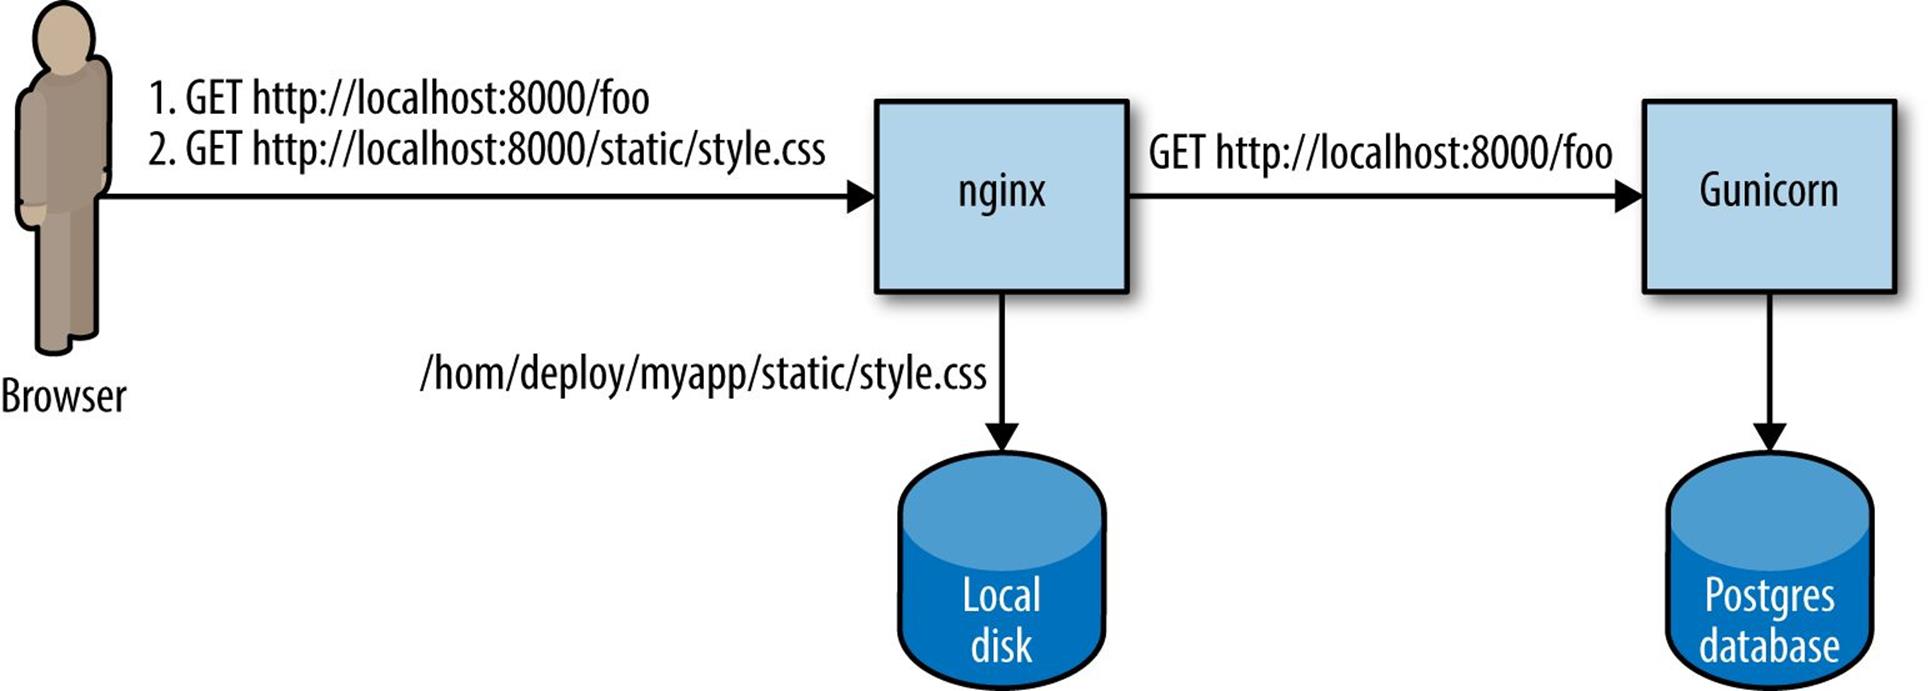 Nginx as a reverse proxy